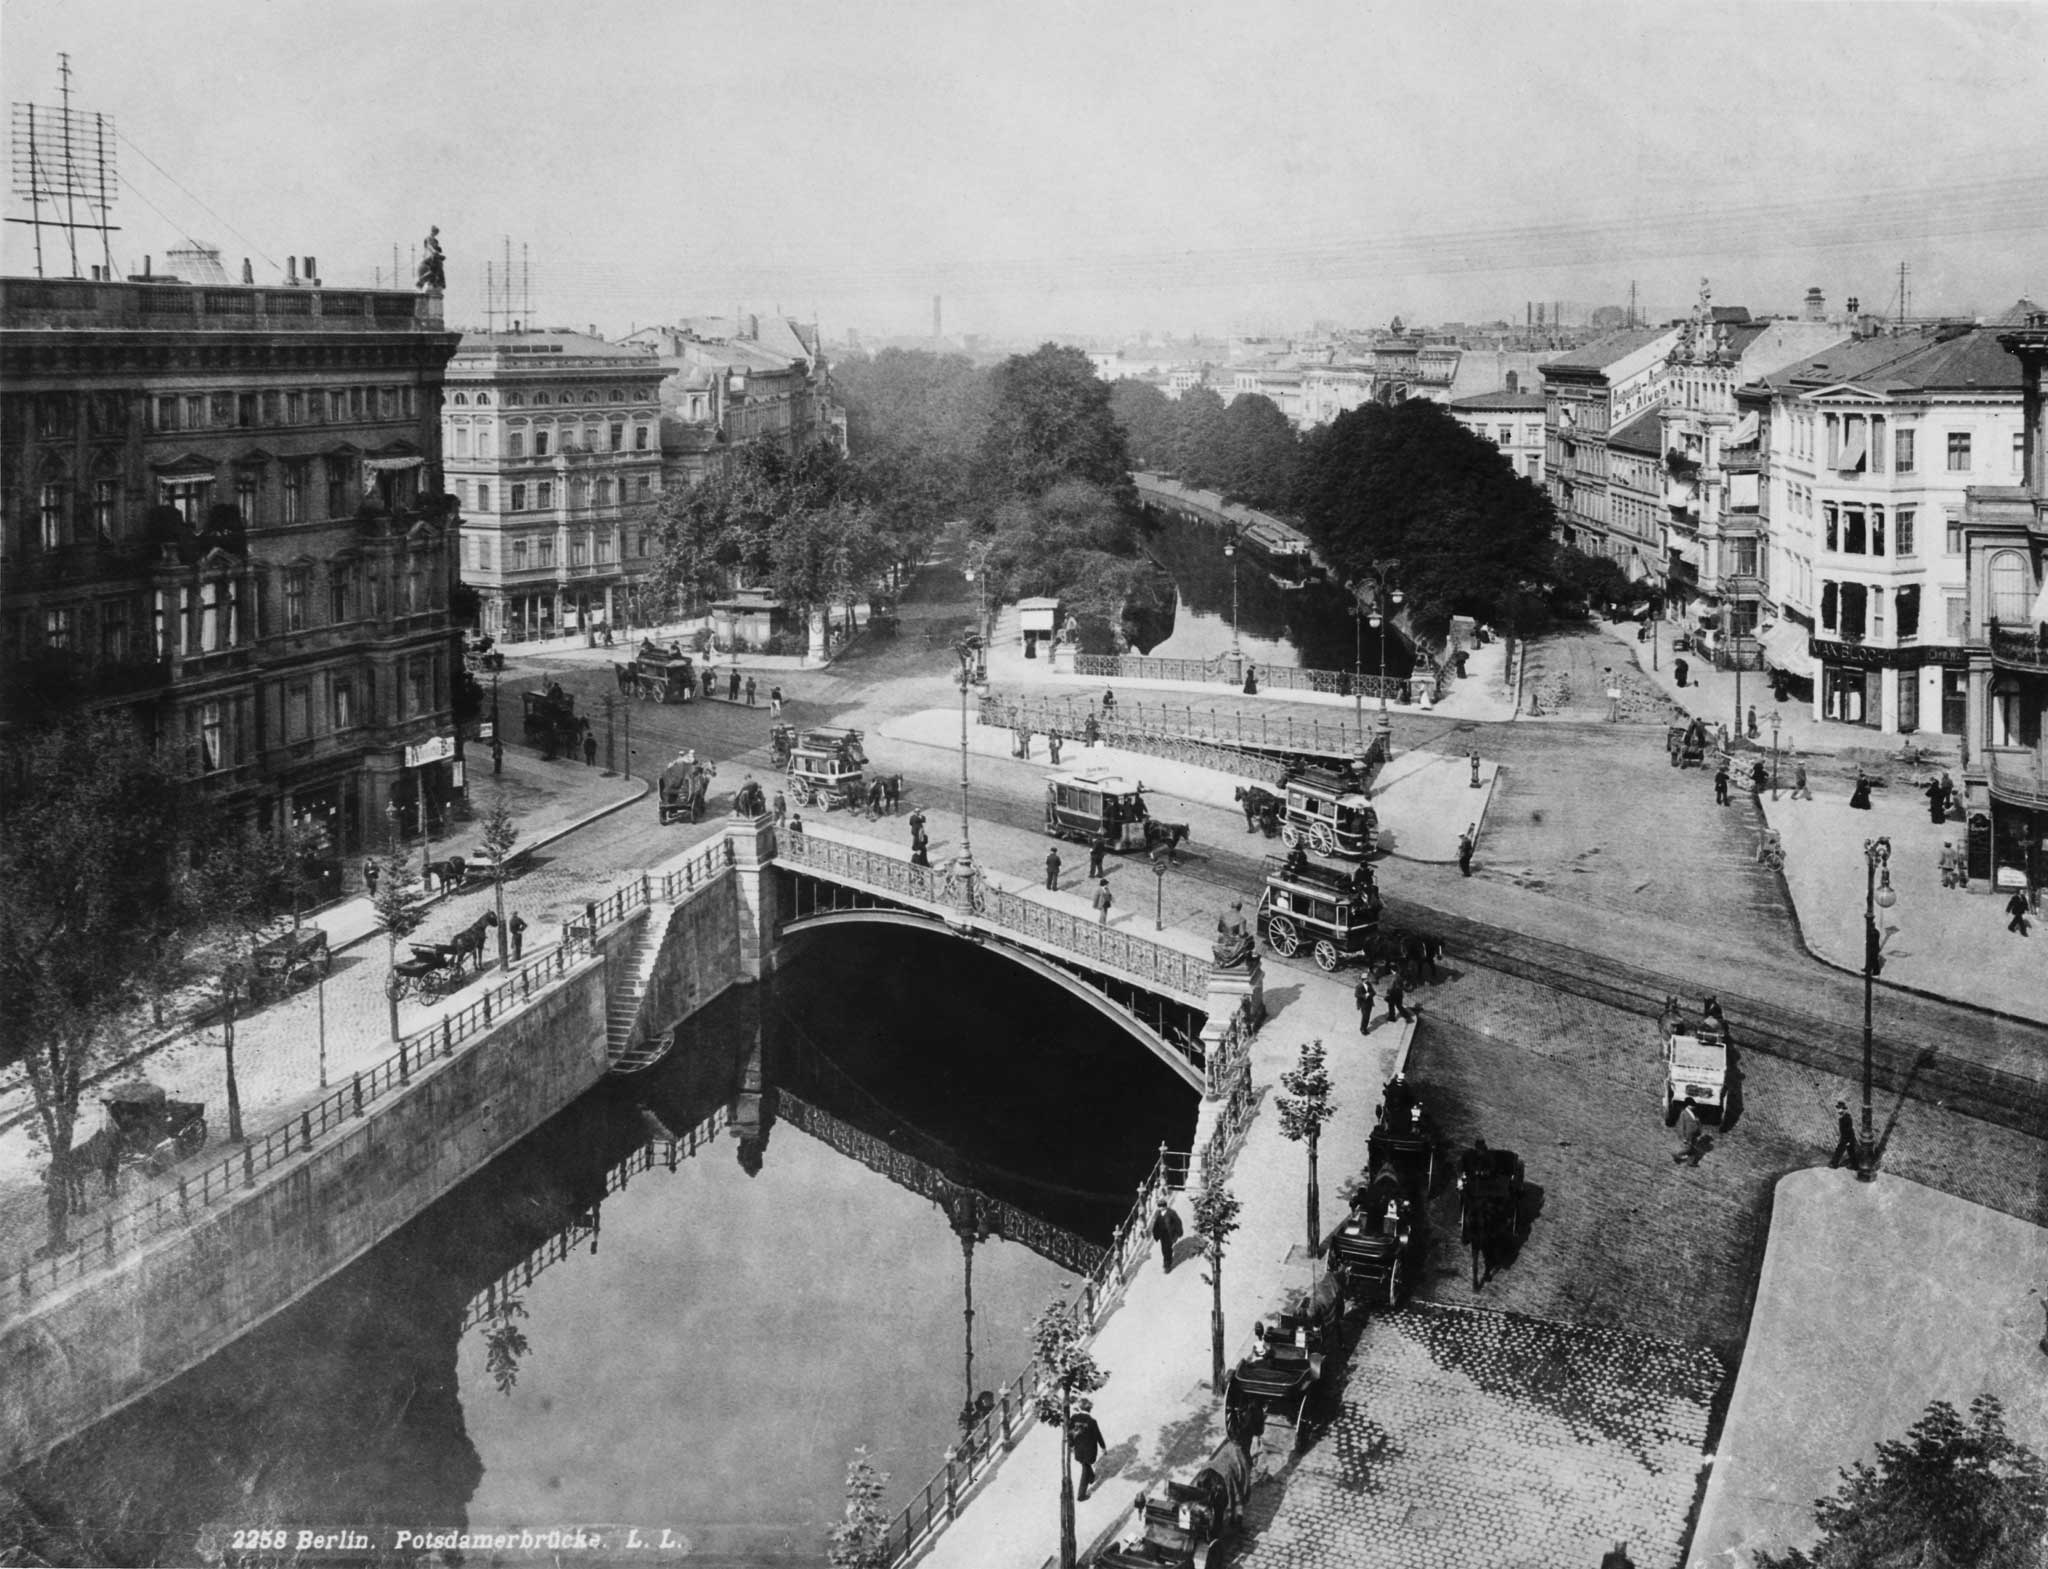 Horse-drawn age: Potsdam Bridge in Berlin, before the First World War